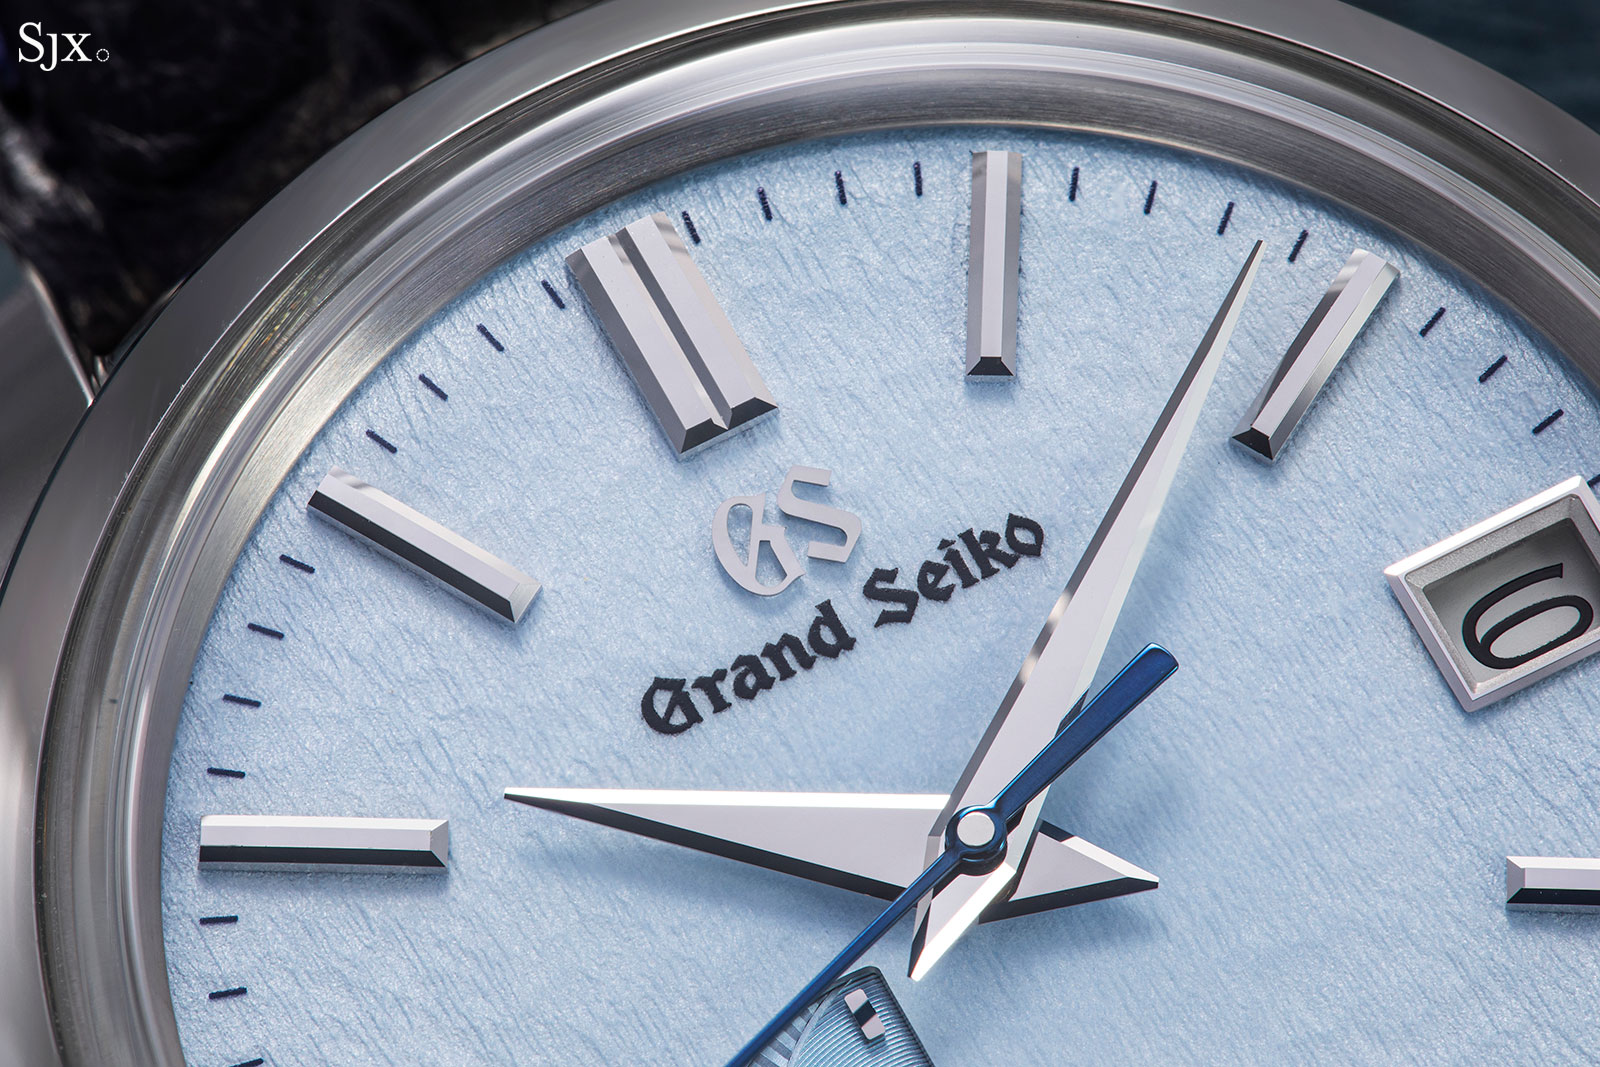 Up Close: Grand Seiko Spring Drive “Blue Snowflake” SBGA407 | SJX Watches